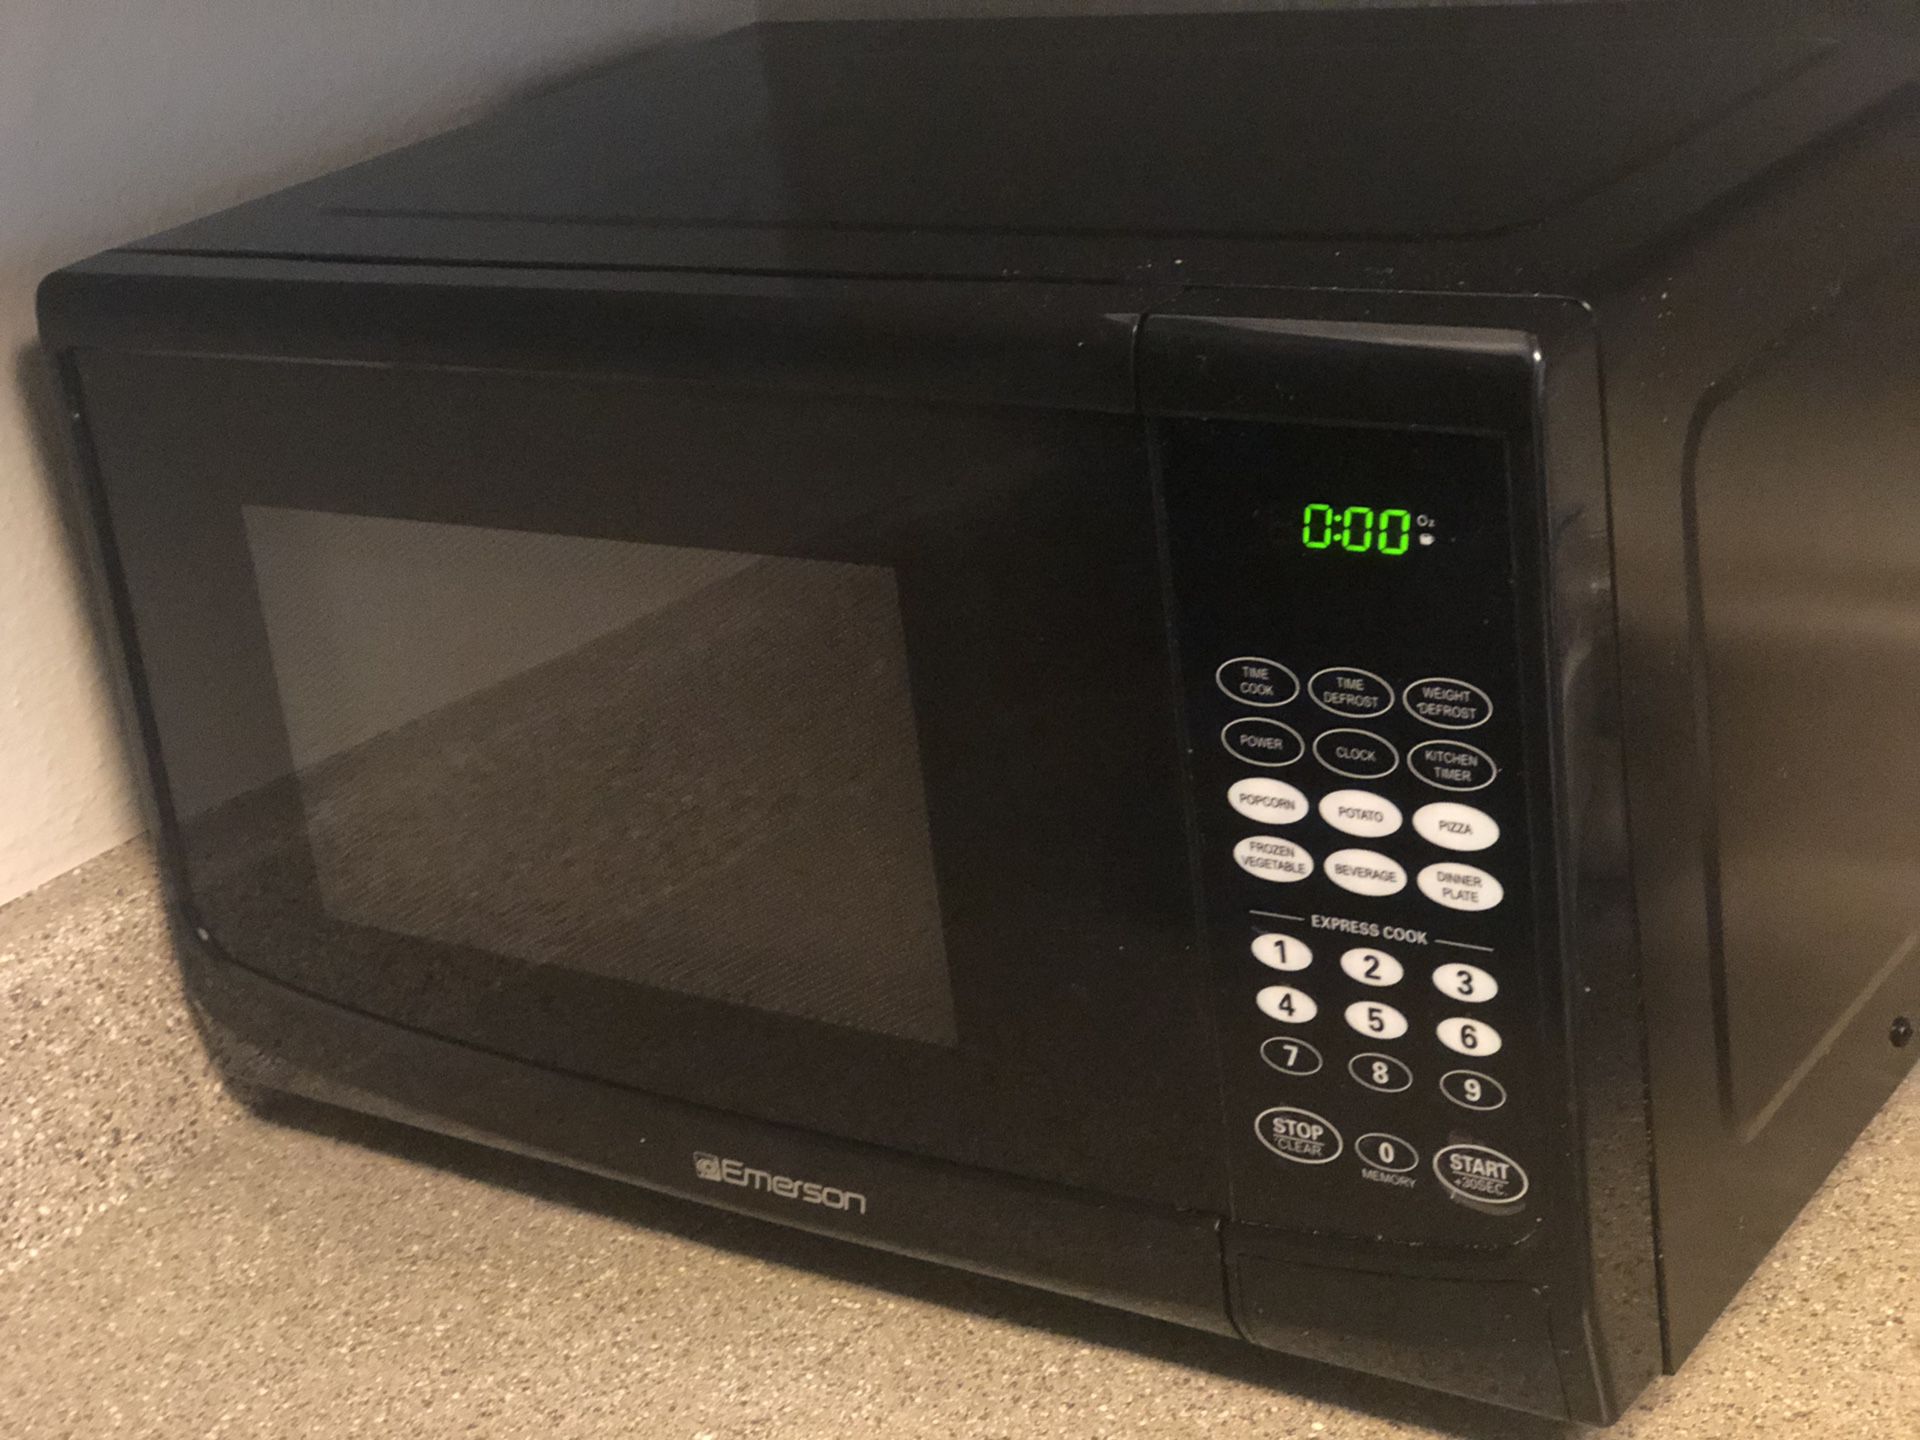 Black Emerson microwave 900 watts